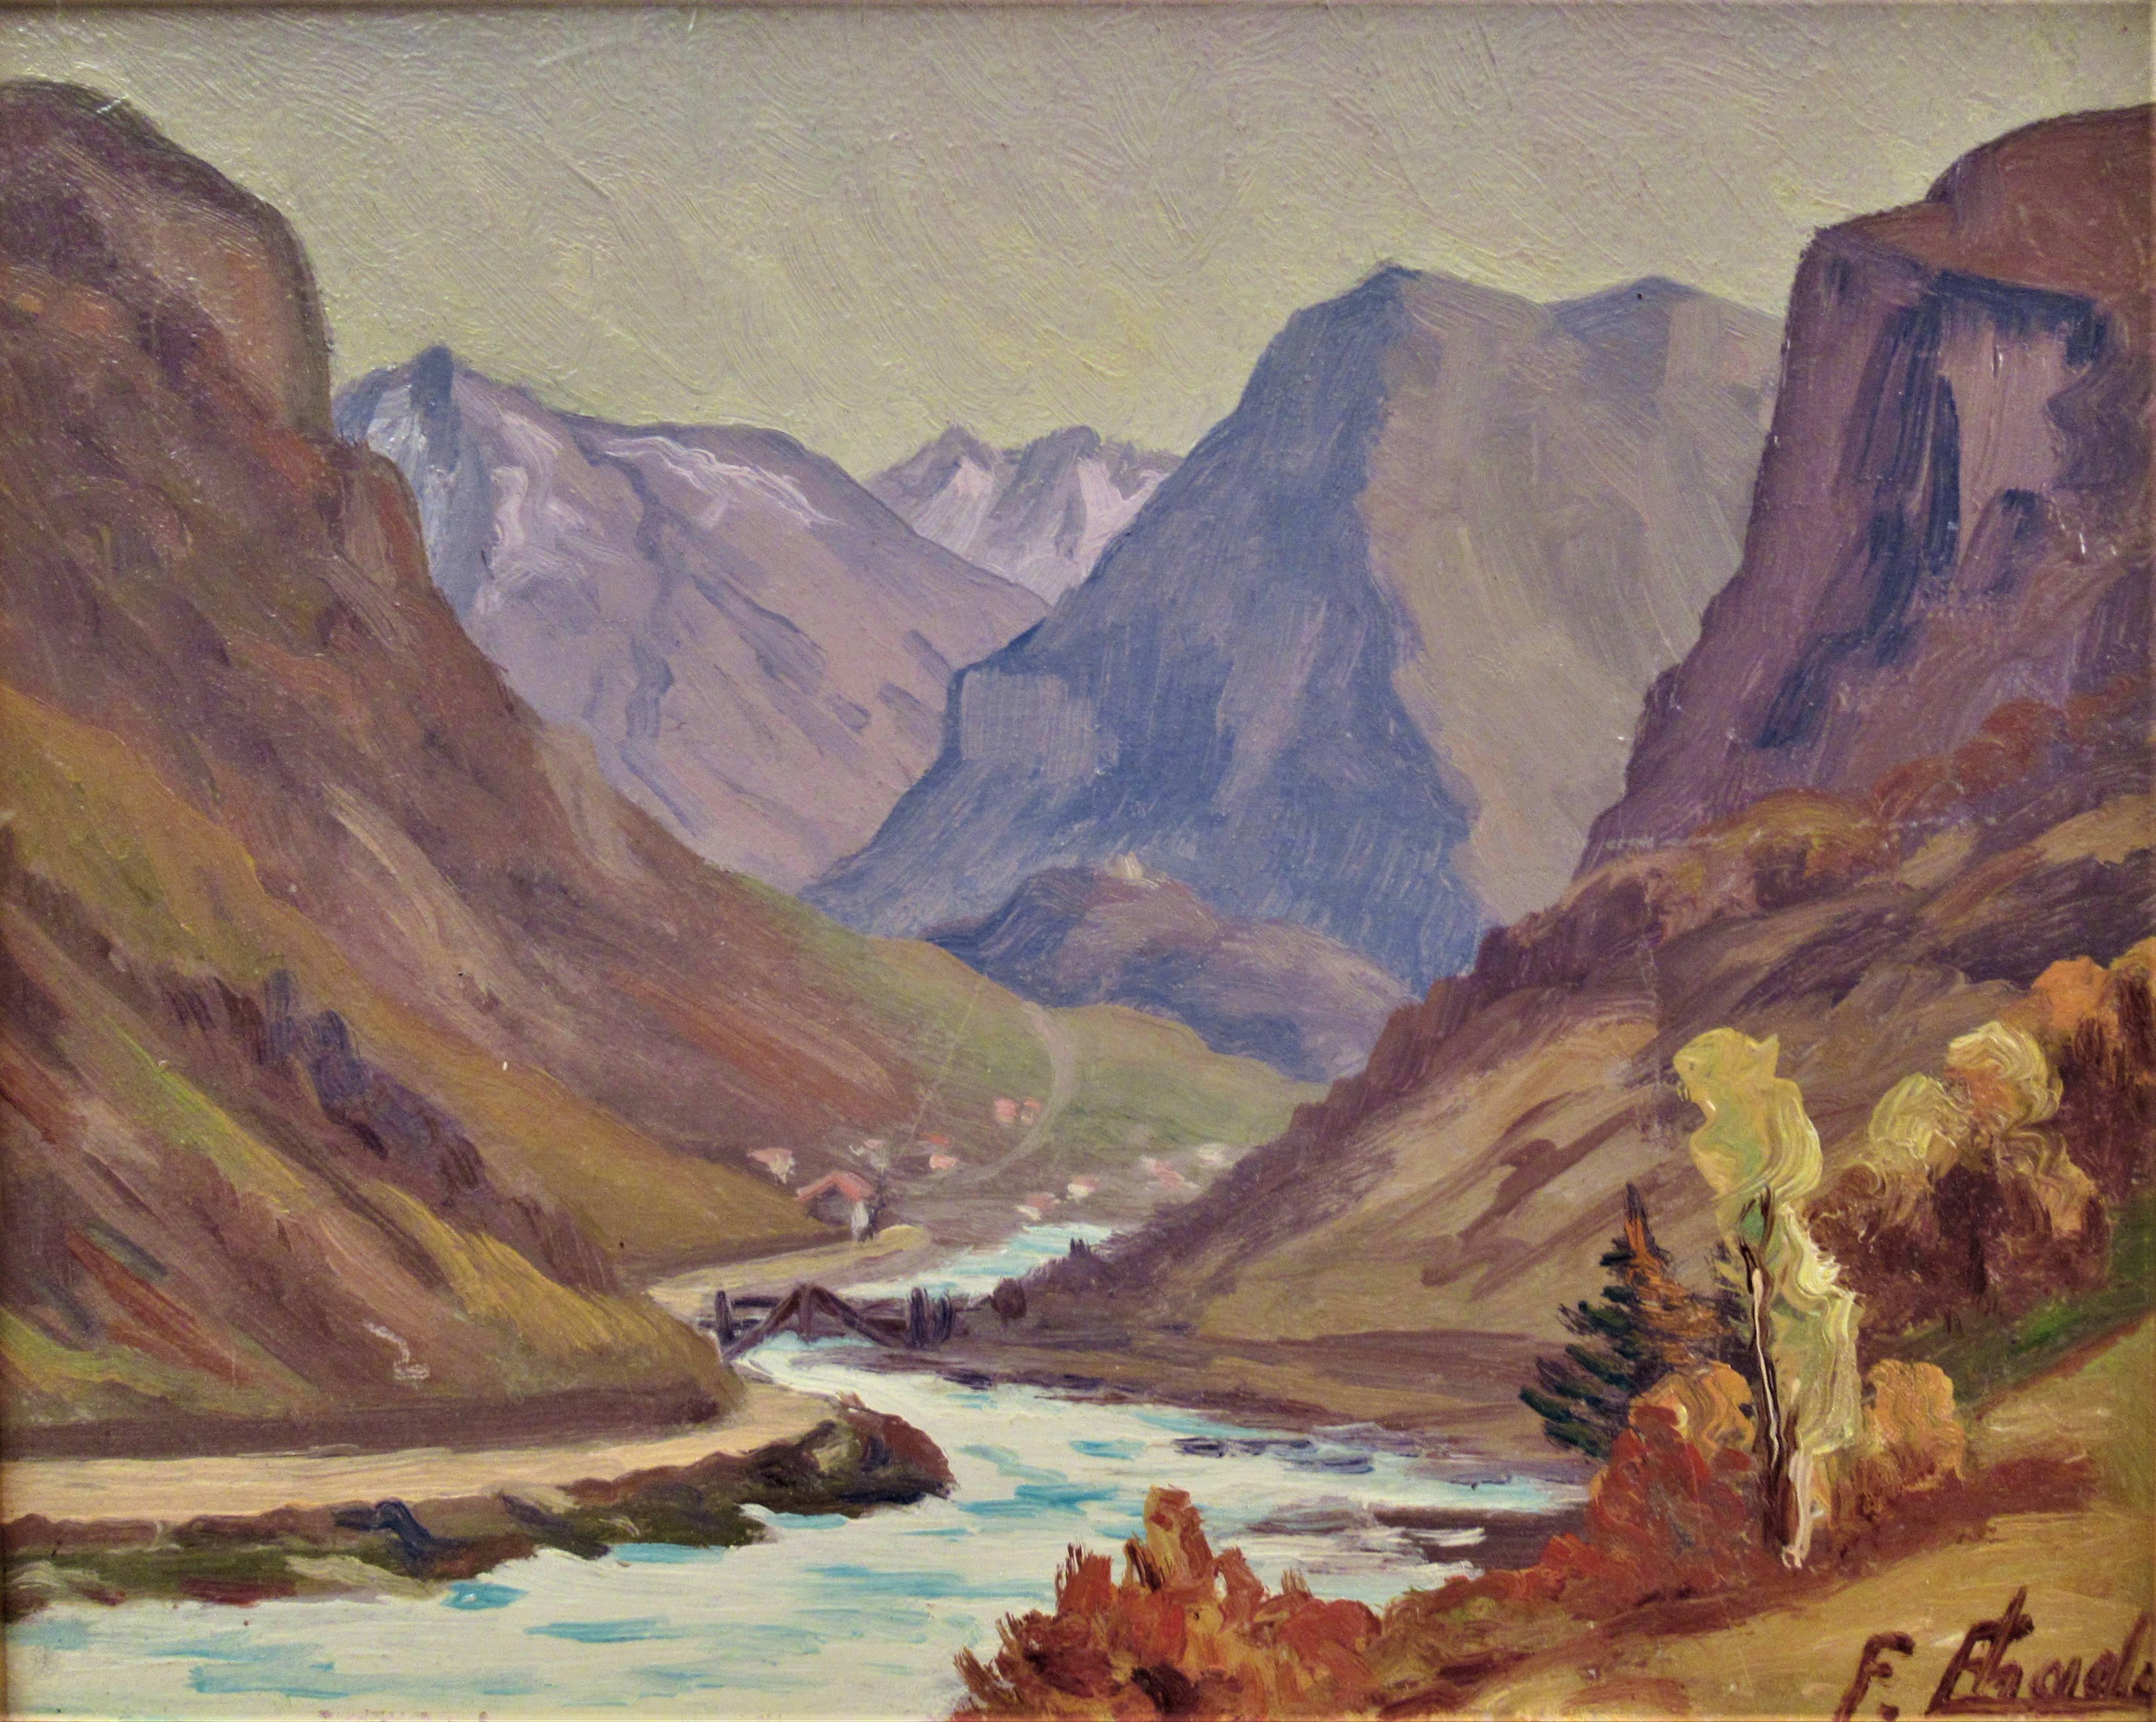 Die Montagne, Pres de Grenoble – Painting von Florent Chade